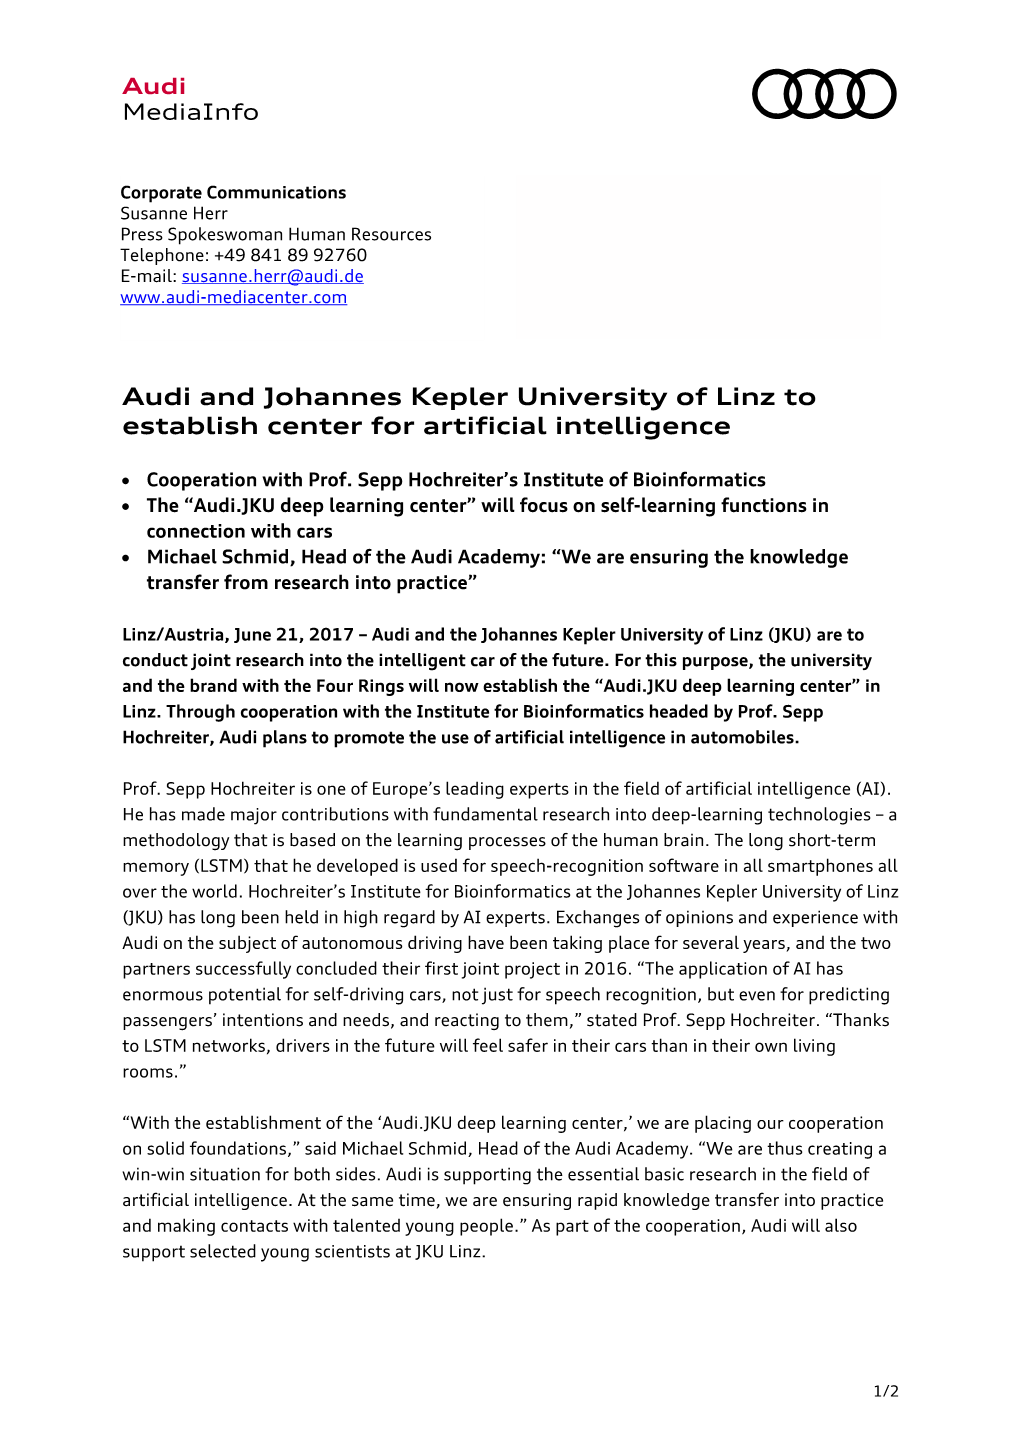 Audi and Johannes Kepler University of Linz to Establish Center for Artificial Intelligence